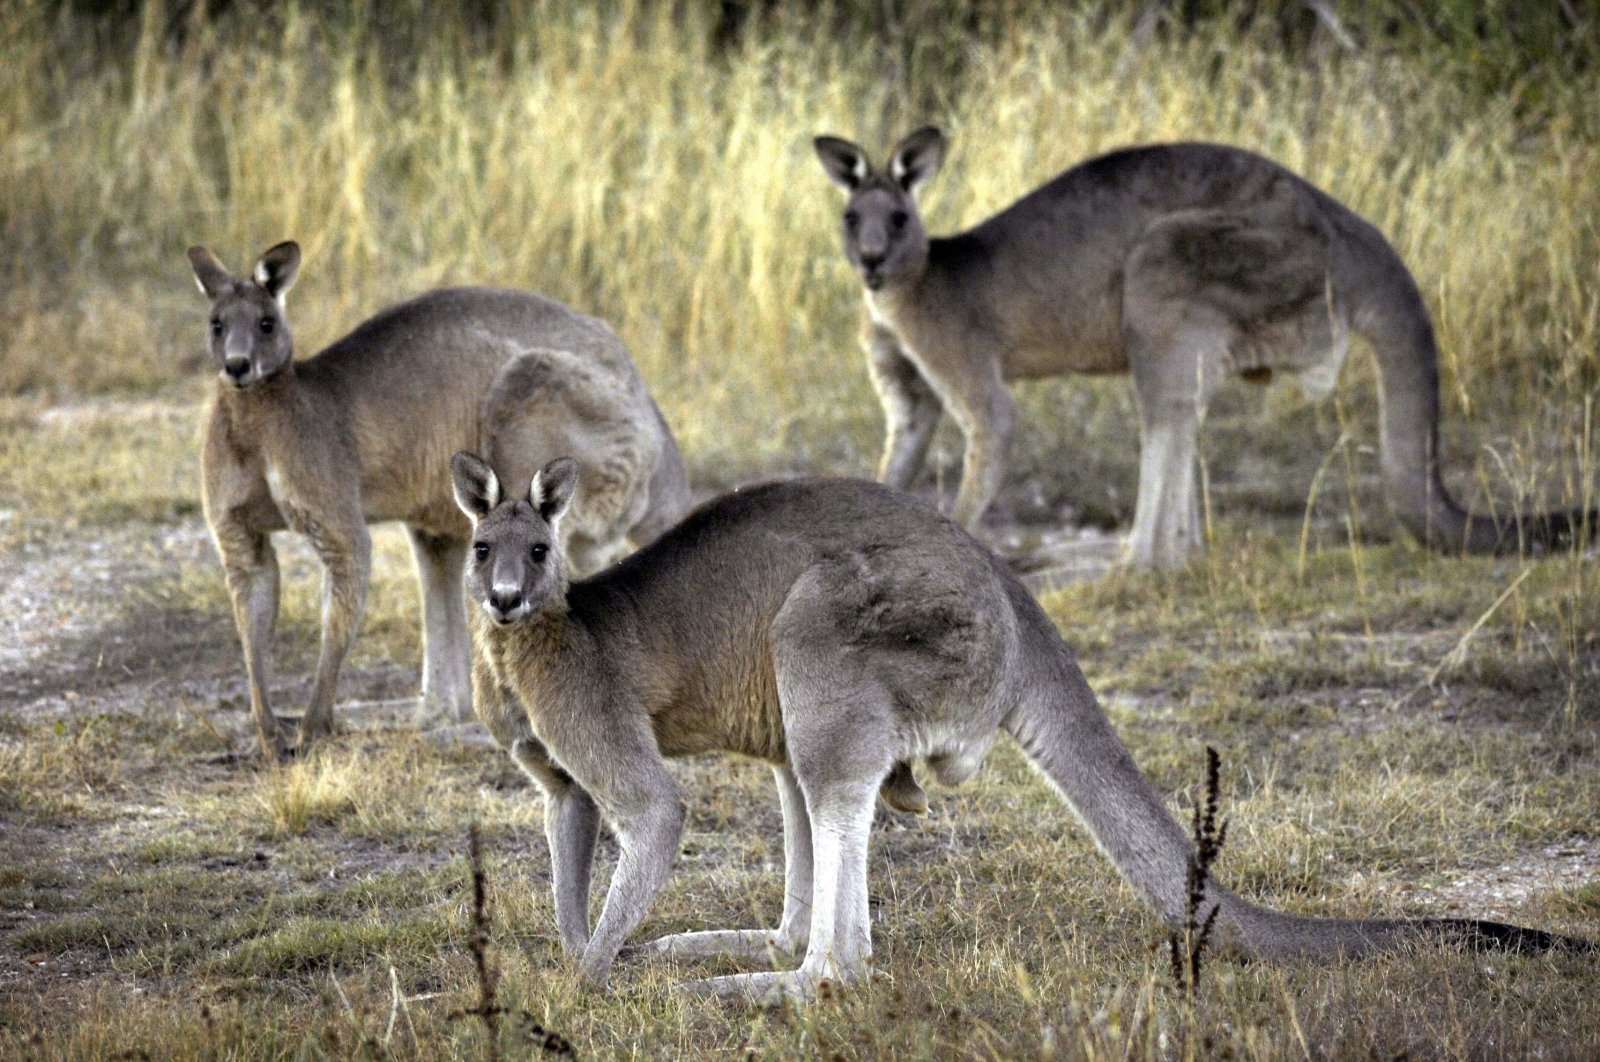 Grey kangaroos feed on grass near Canberra, Australia, March 15, 2008. (AP File Photo)